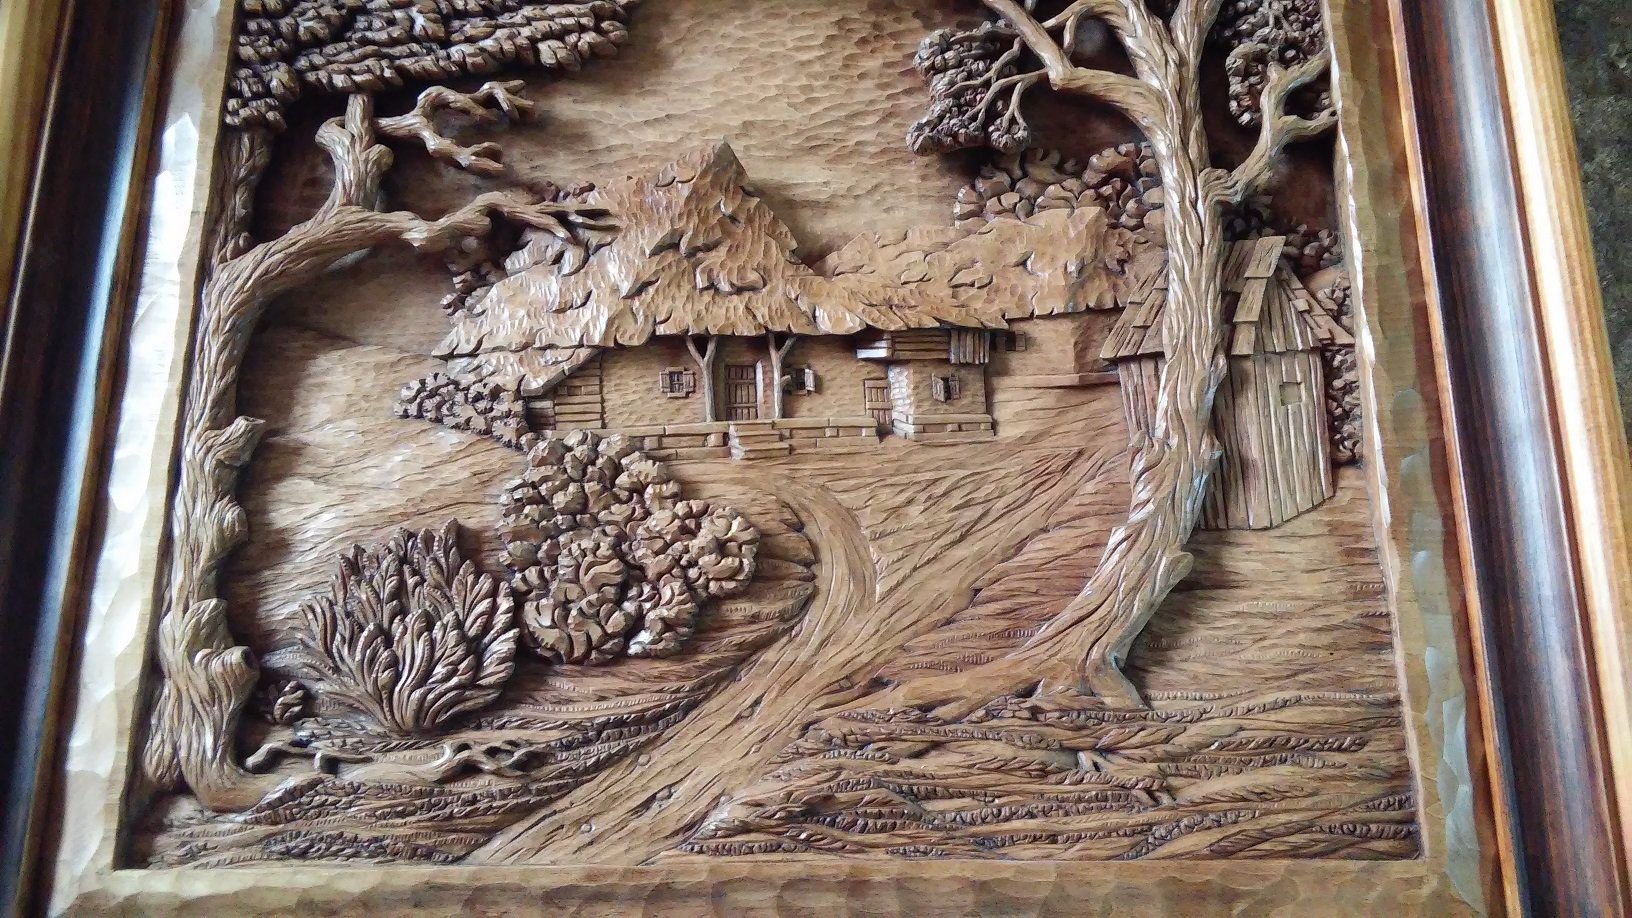 Резьба на ели. Художественная резьба по дереву Петра Носикова. Панно по дереву. Резьба по дереву пейзажи. Резные картины из дерева.